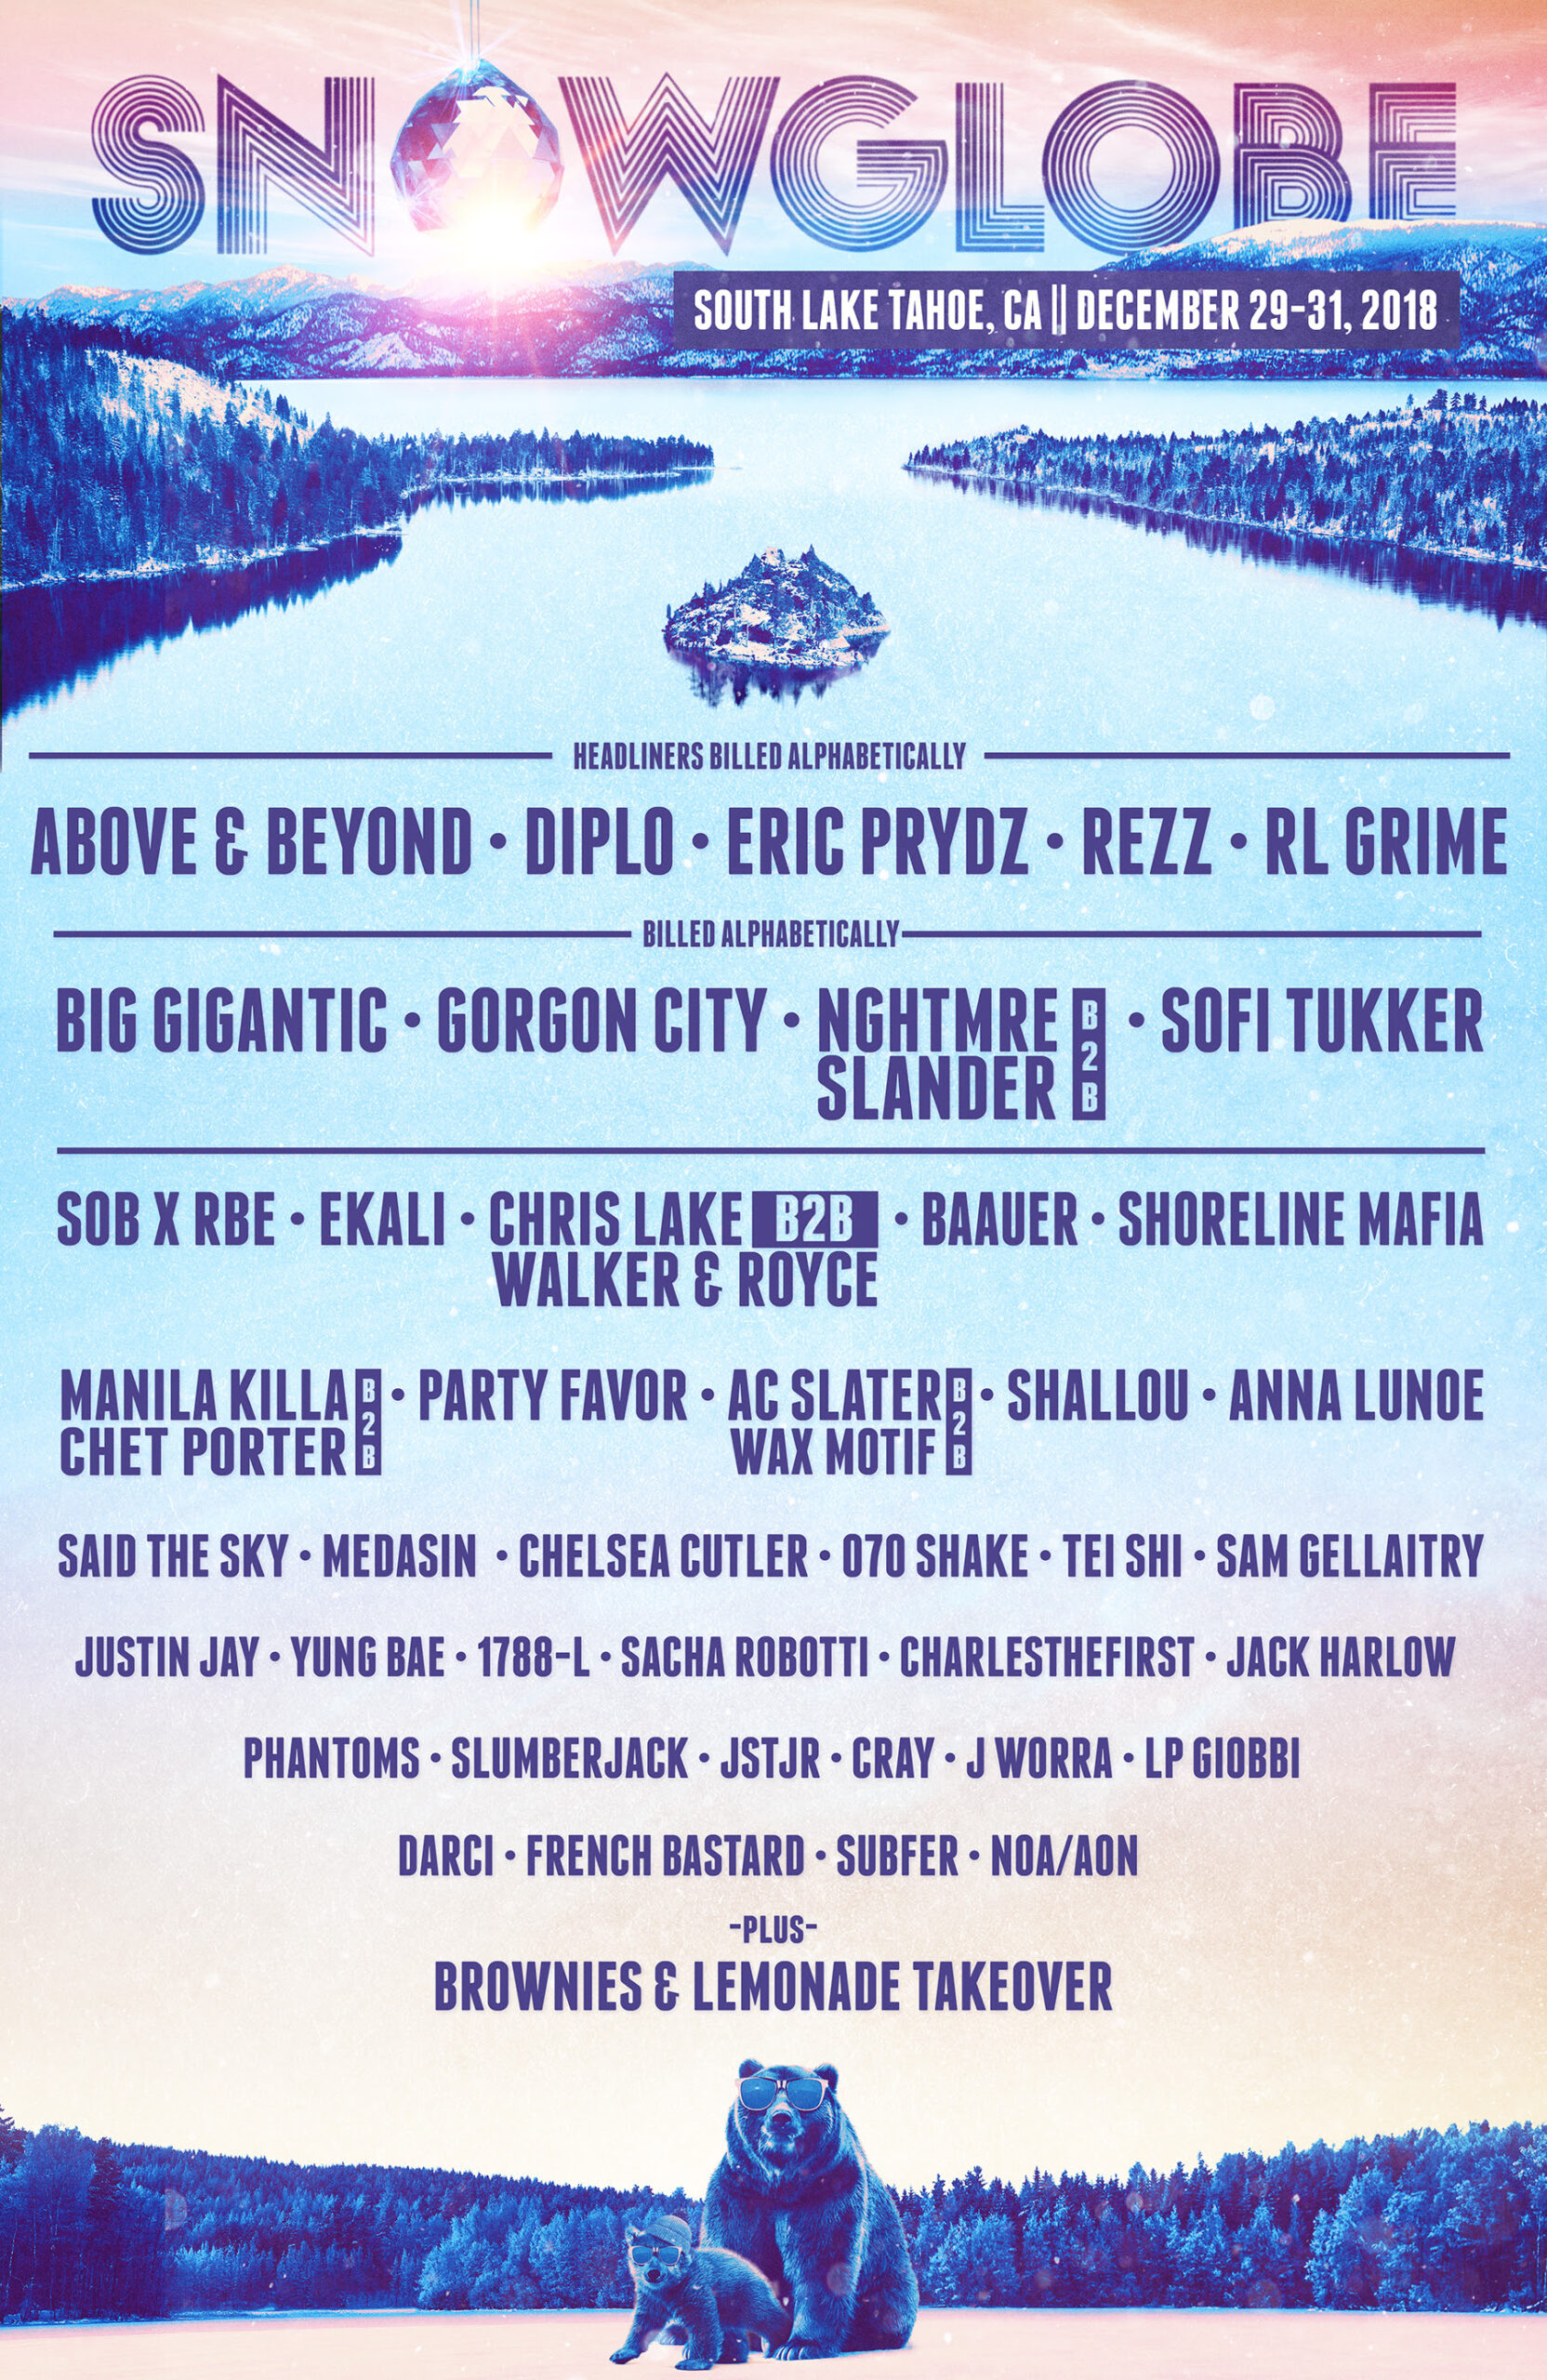 SnowGlobe Music Festival 2018 lineup. Photo provided.